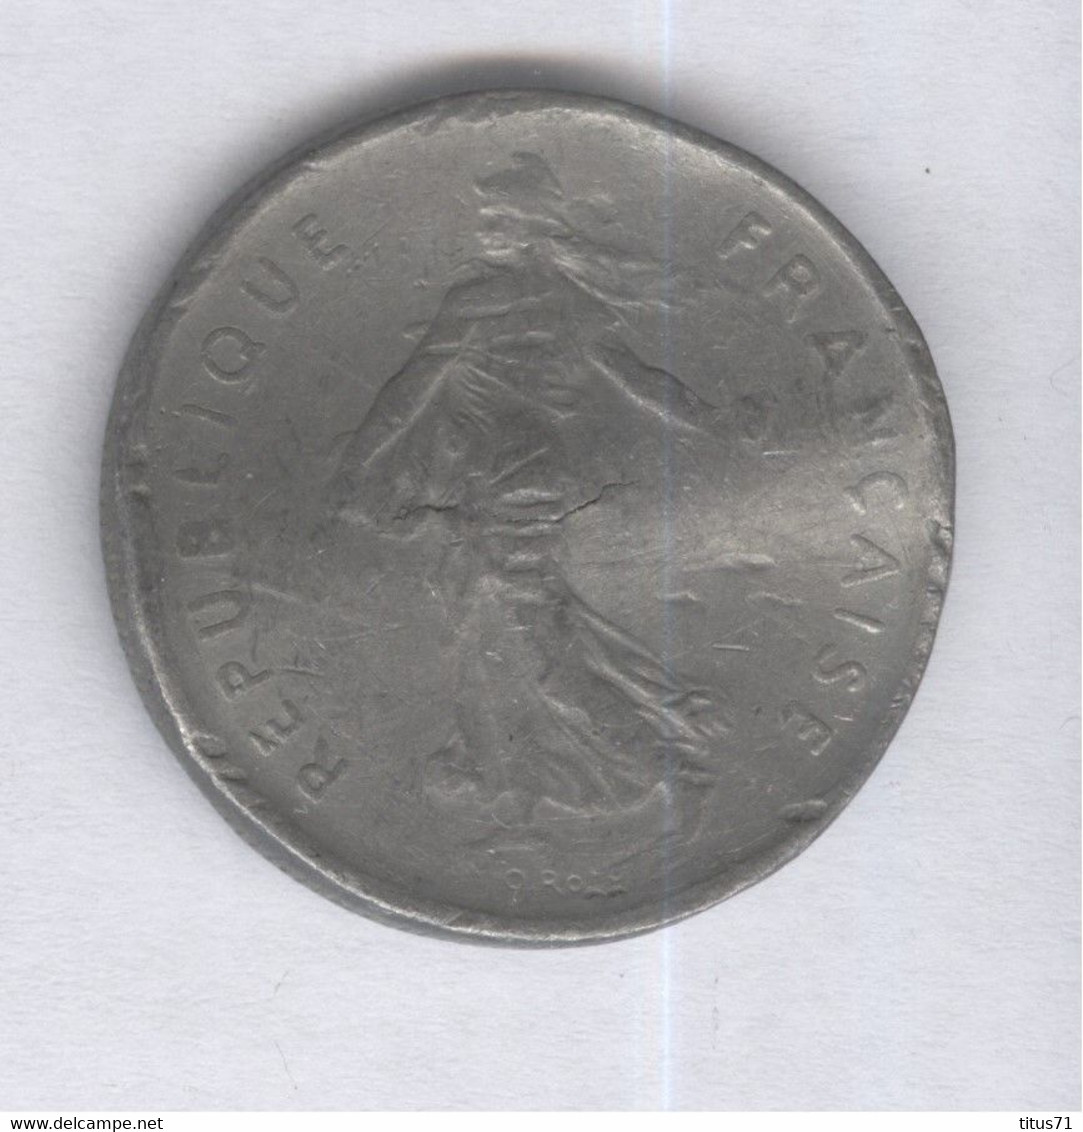 Fausse 5 Francs France 1971 - Moulée - Exonumia - Errores Y Curiosidades